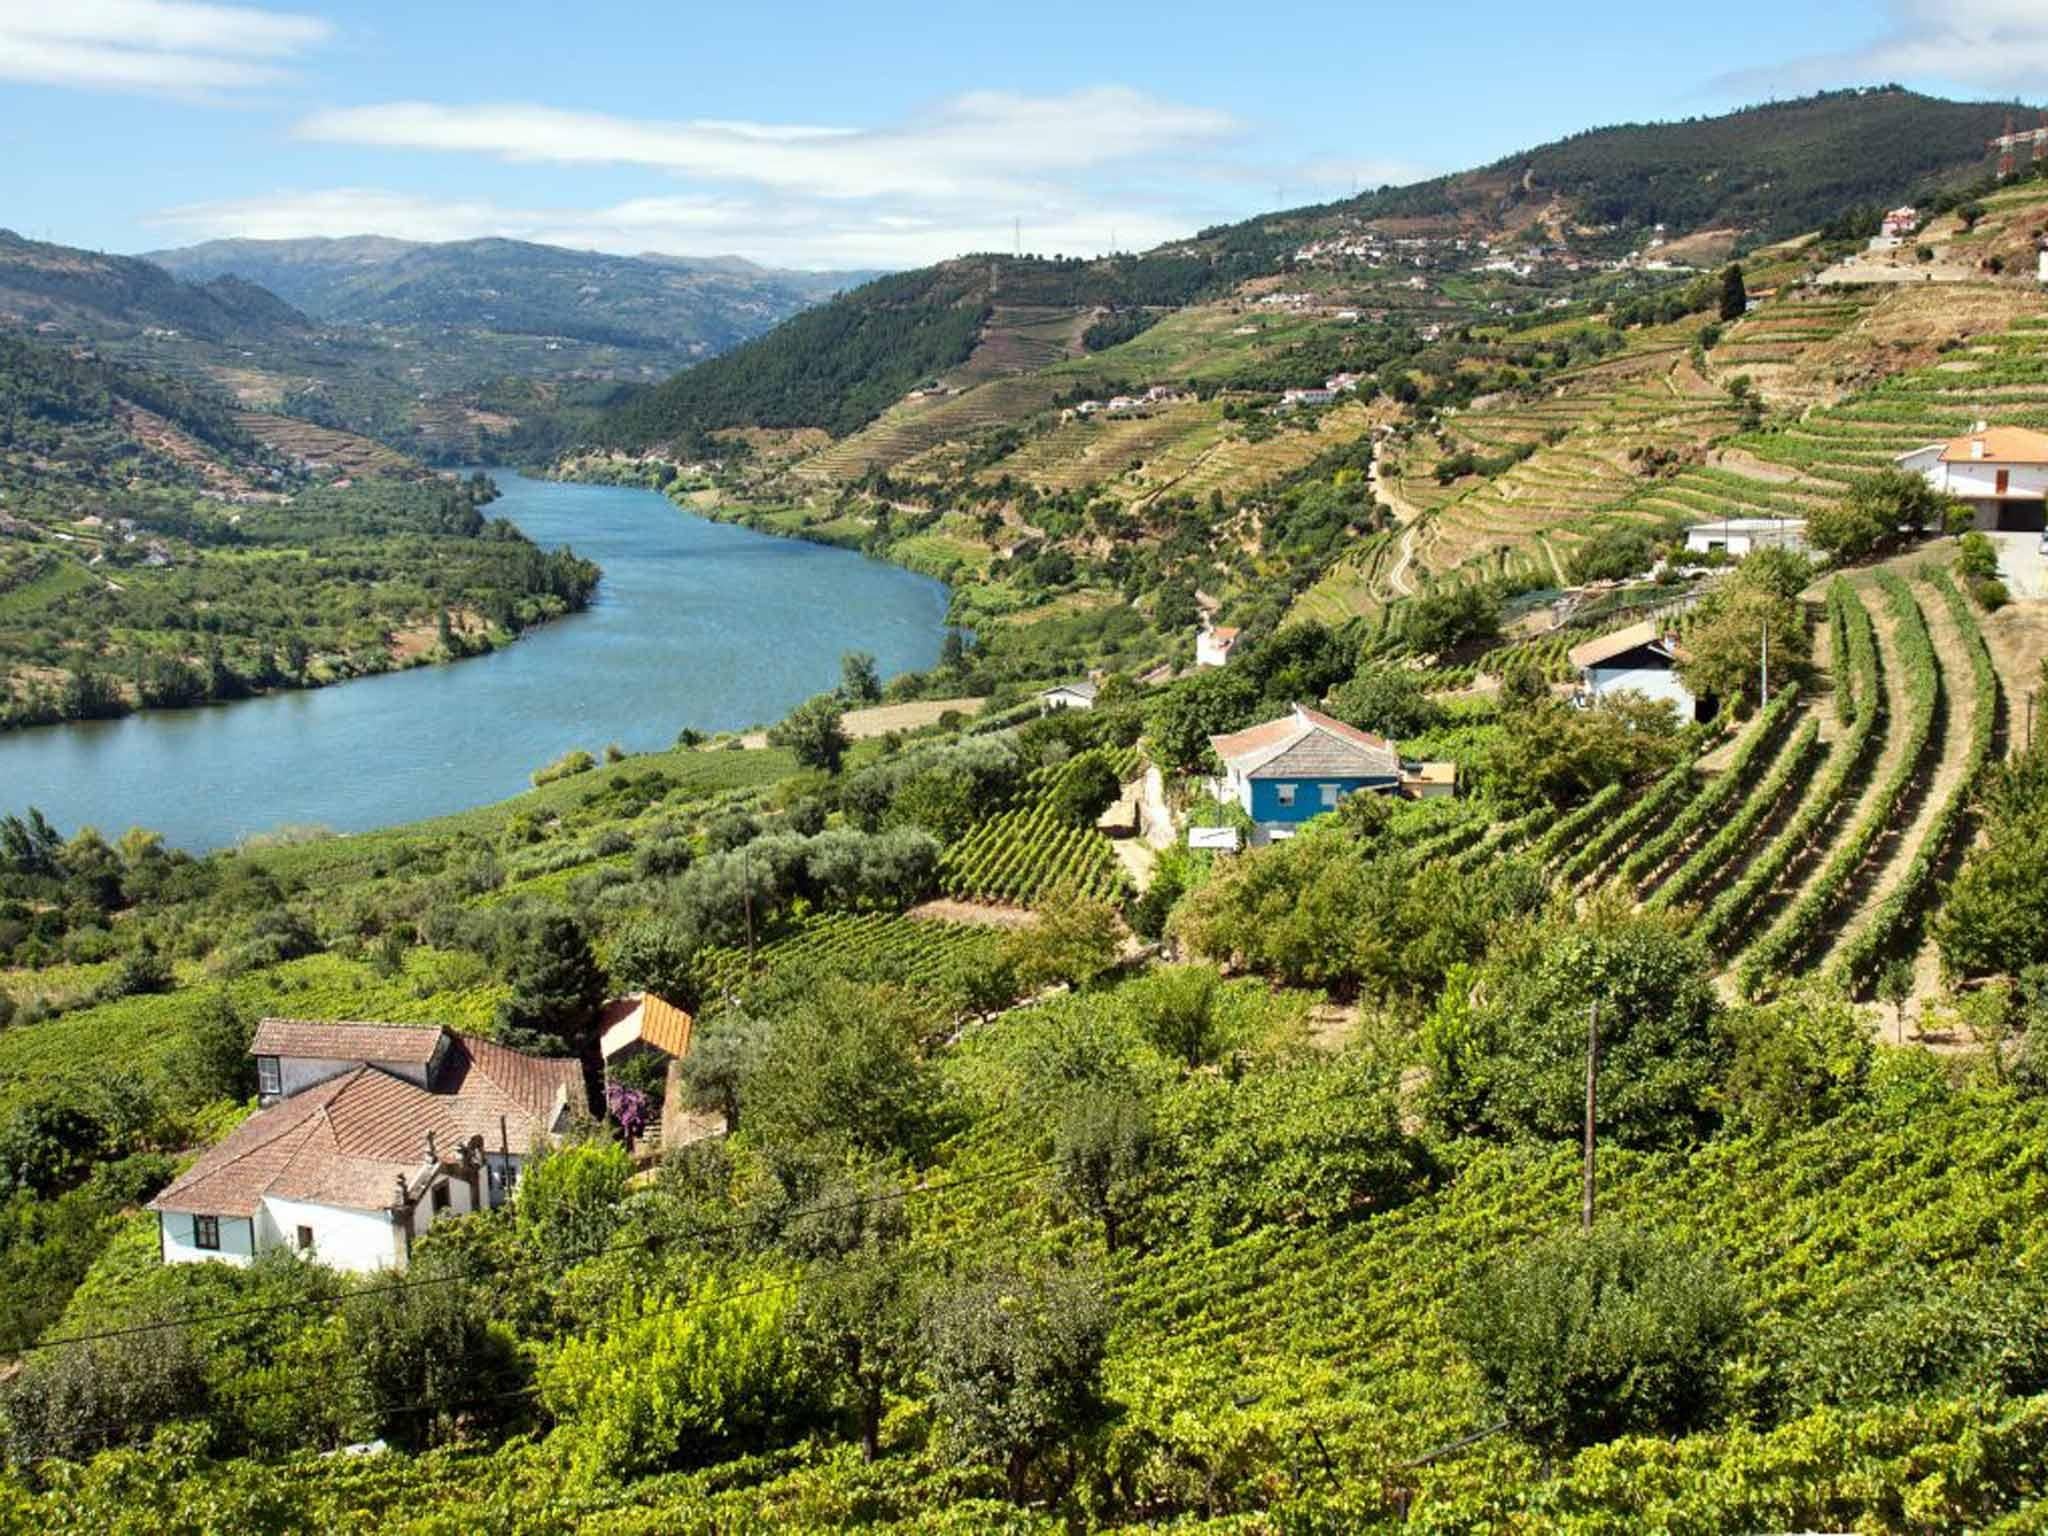 The Douro Valley vineyards